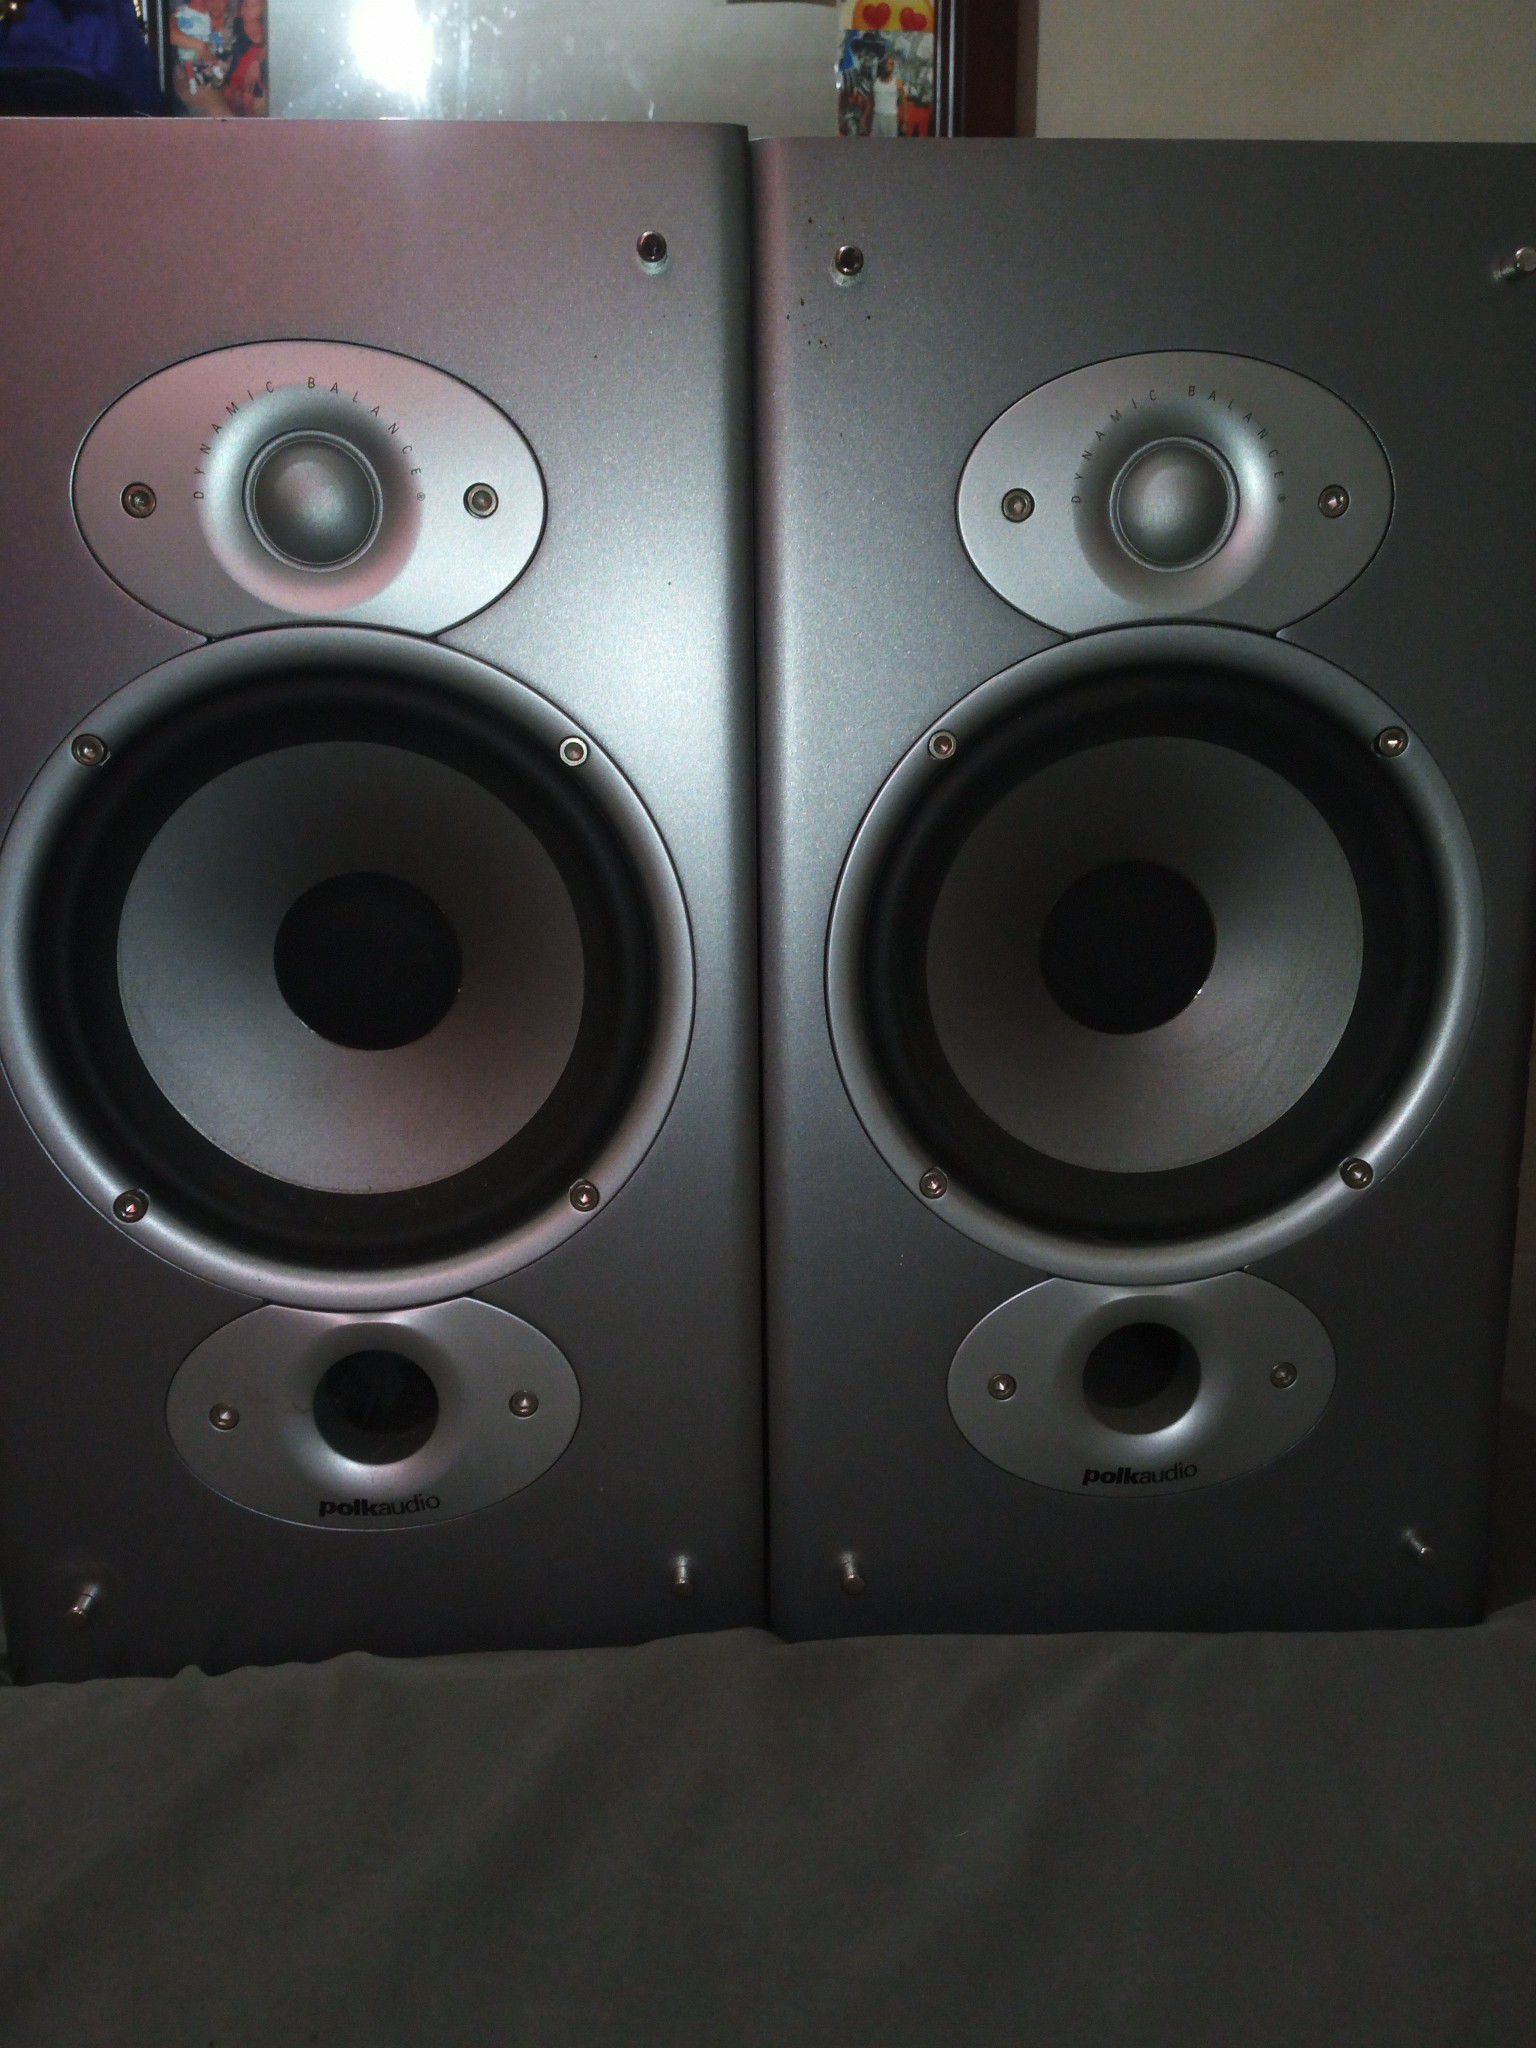 Polk audio speakers good for studio or surround system